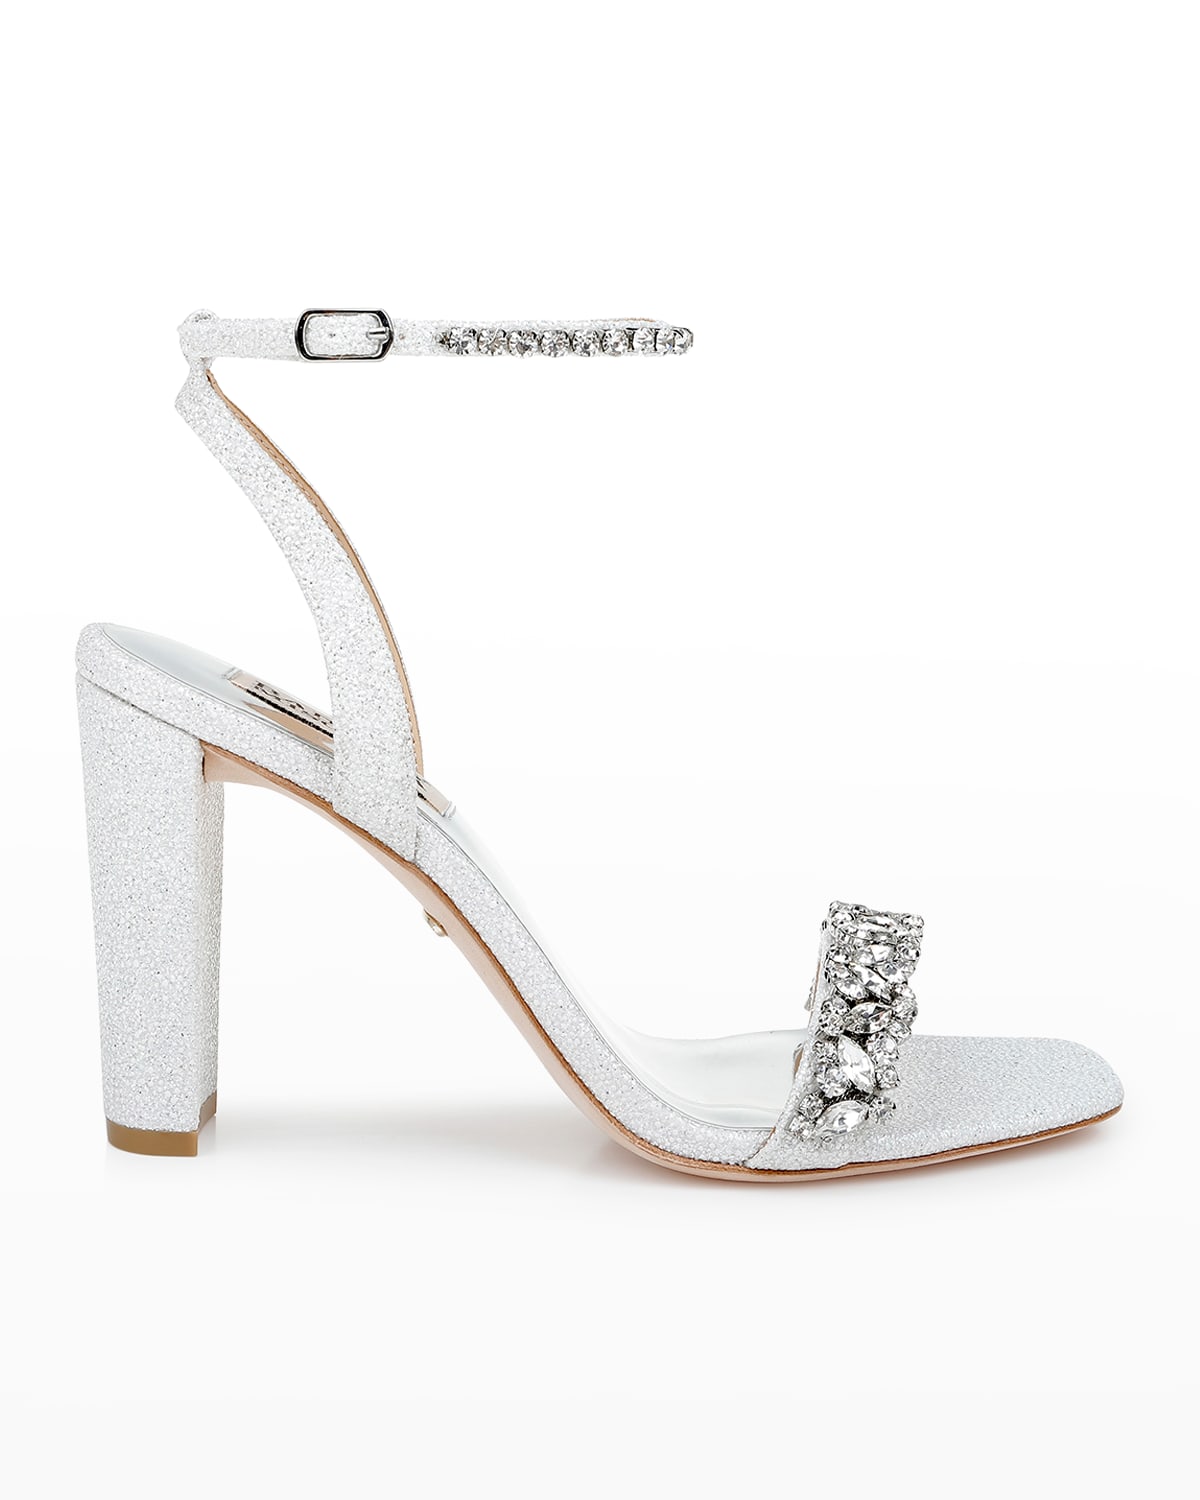 Badgley Mischka Tasmine Metallic Crystal Ankle-Strap Sandals